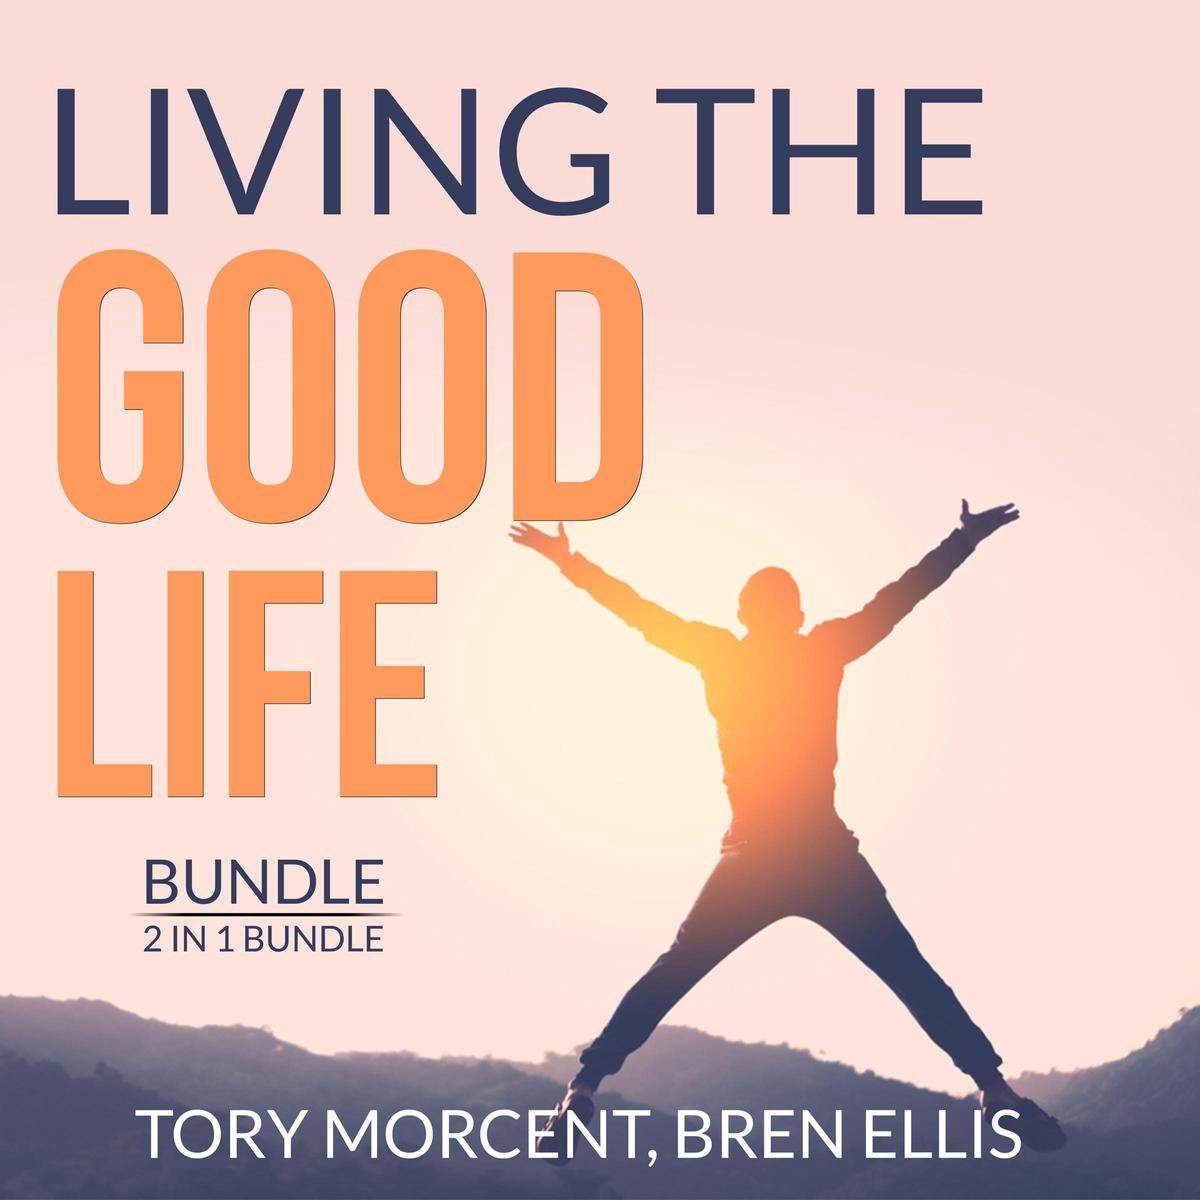 Living the Good Life Bundle, 2 in 1 Bundle: Good Vibes, Good Life and A Guide to the Good Life - Tory Morcent